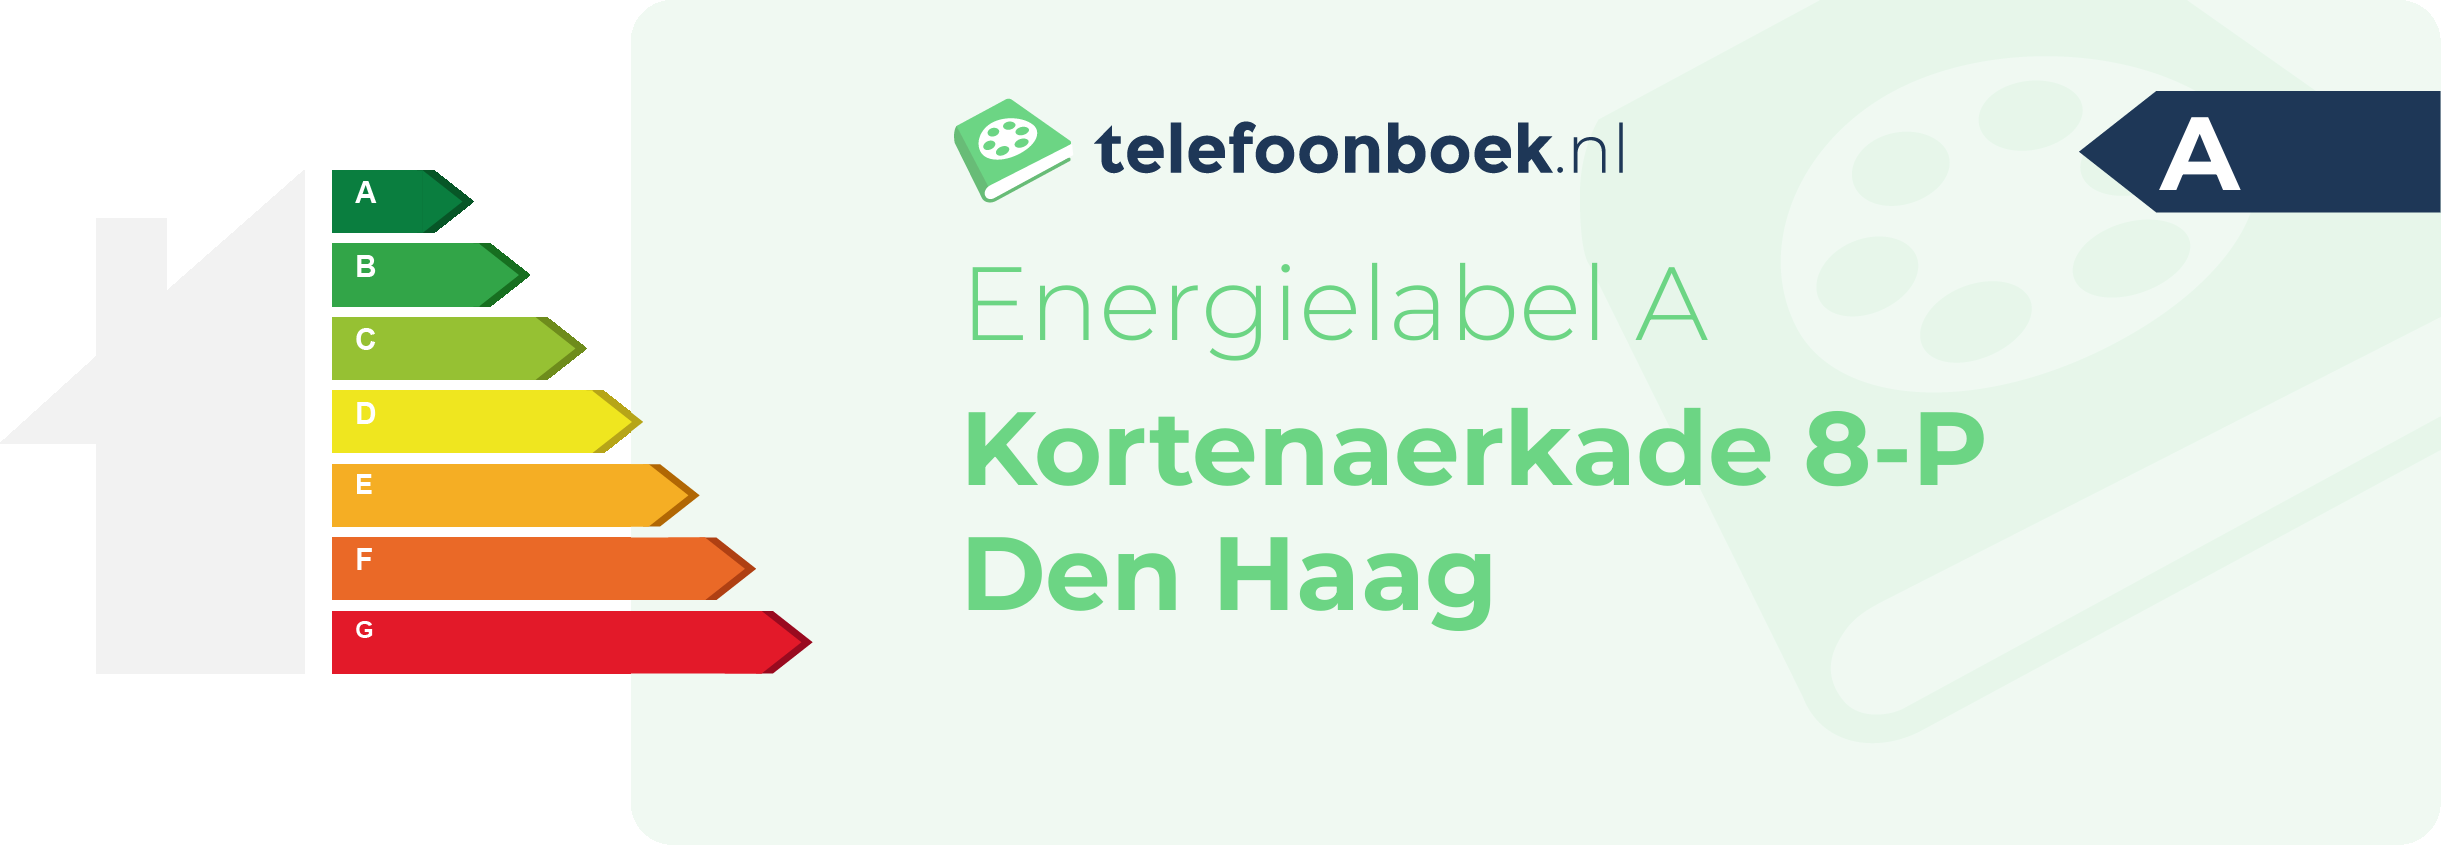 Energielabel Kortenaerkade 8-P Den Haag